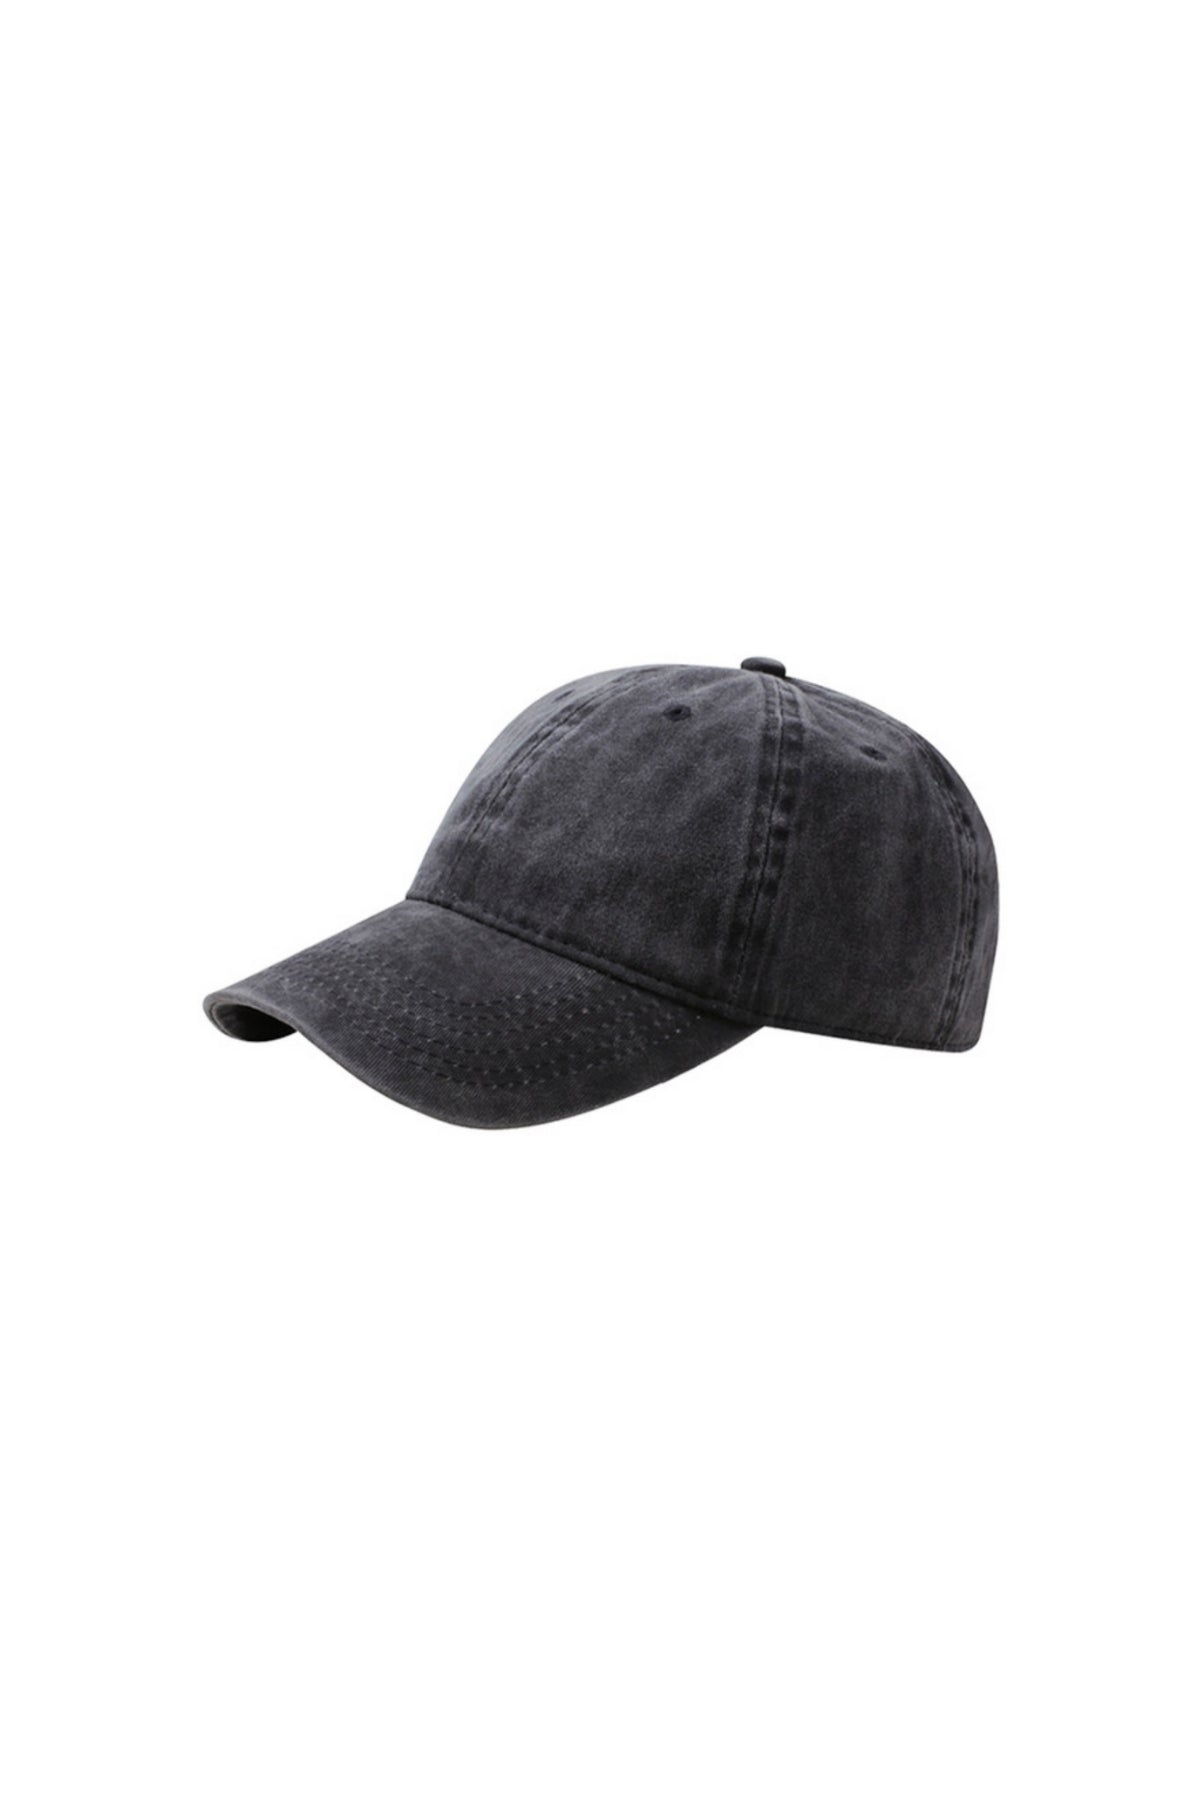 Black rugged washed cap